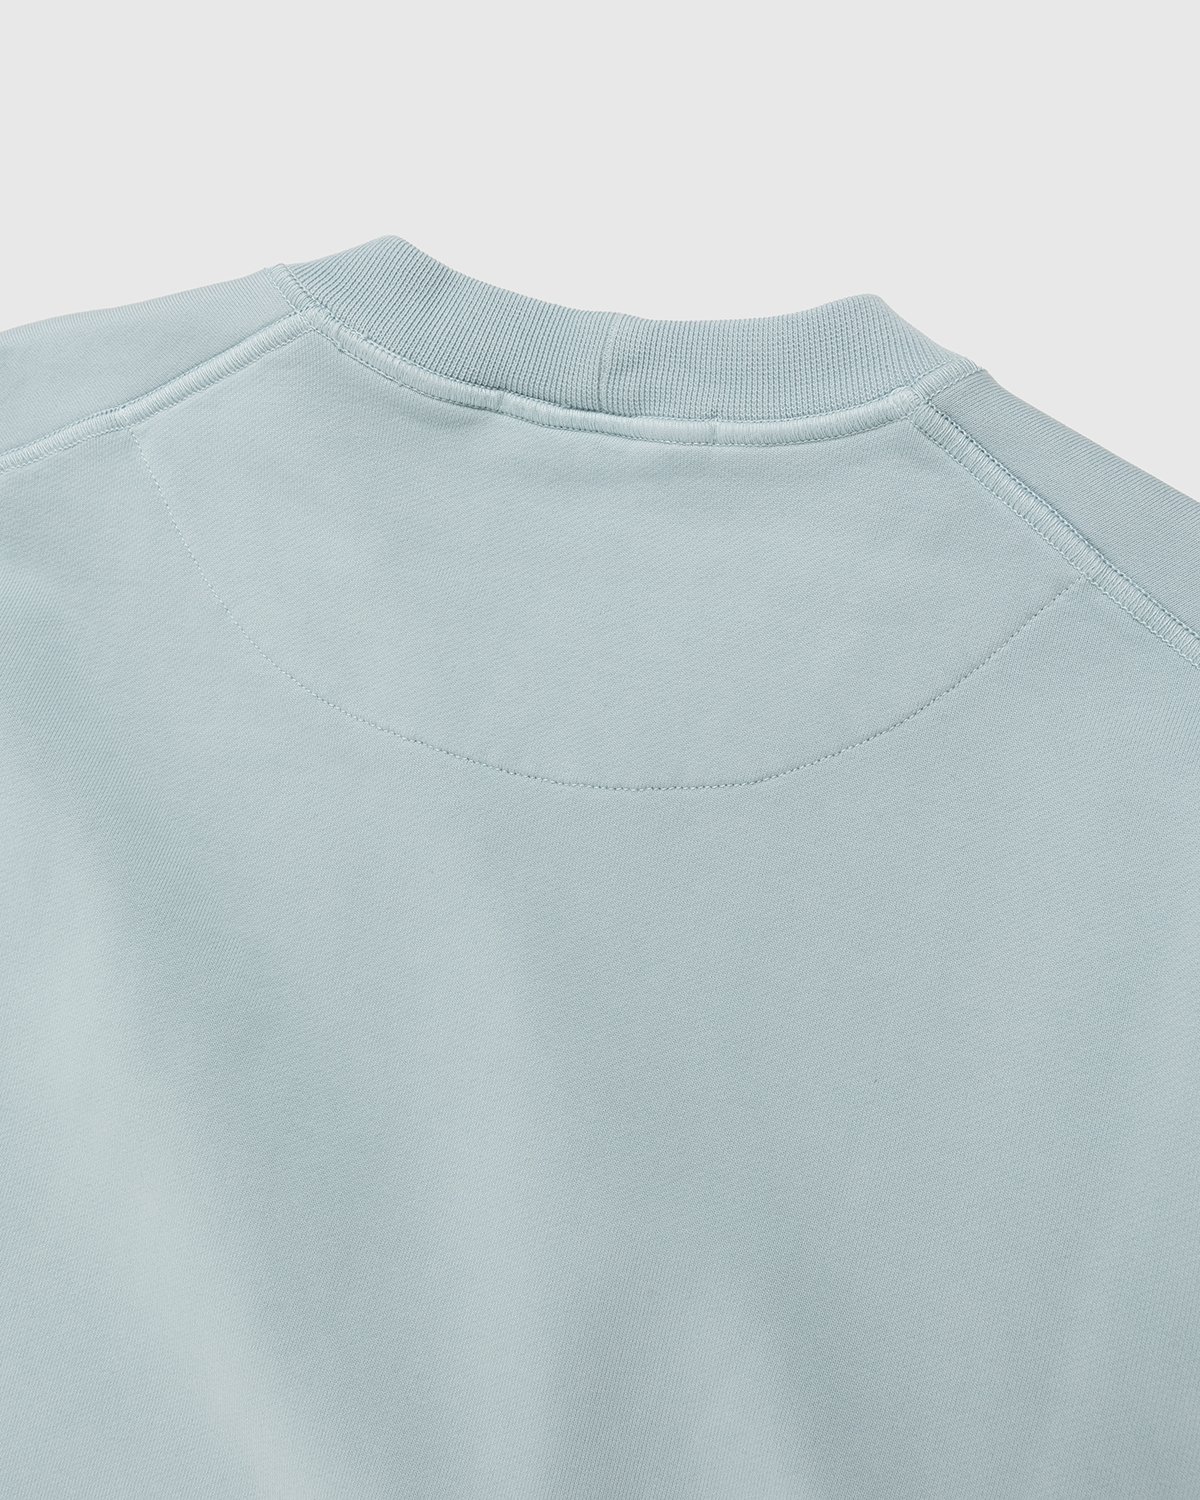 Stone Island - 63051 Garment-Dyed Cotton Fleece Crewneck Aqua - Clothing - Blue - Image 4